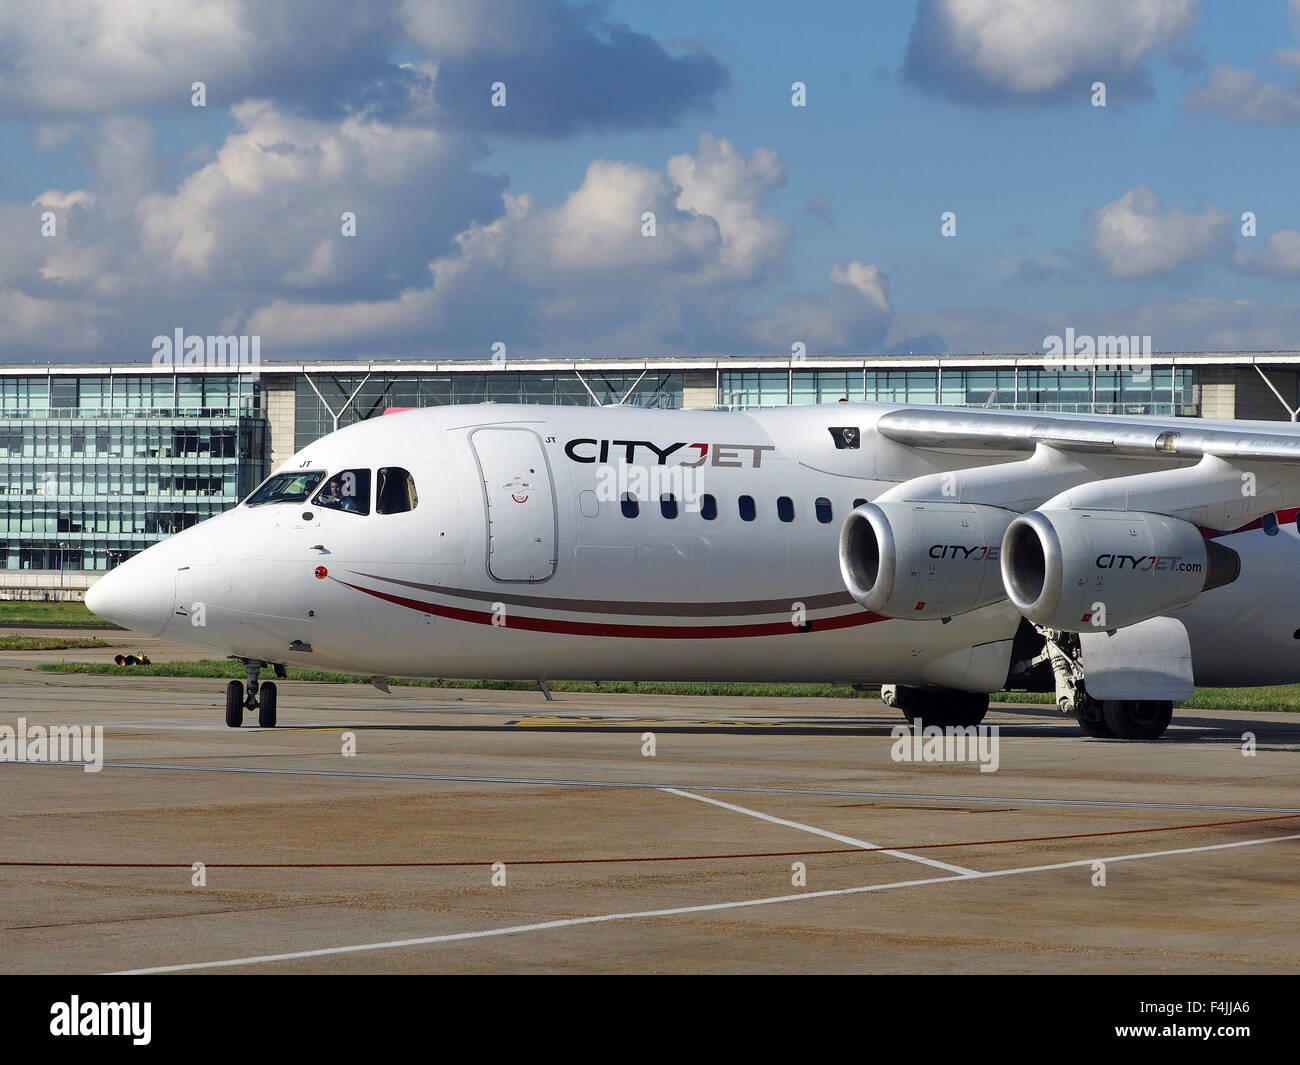 CityJet plane at London City Airport, Britain, UK Stock Photo